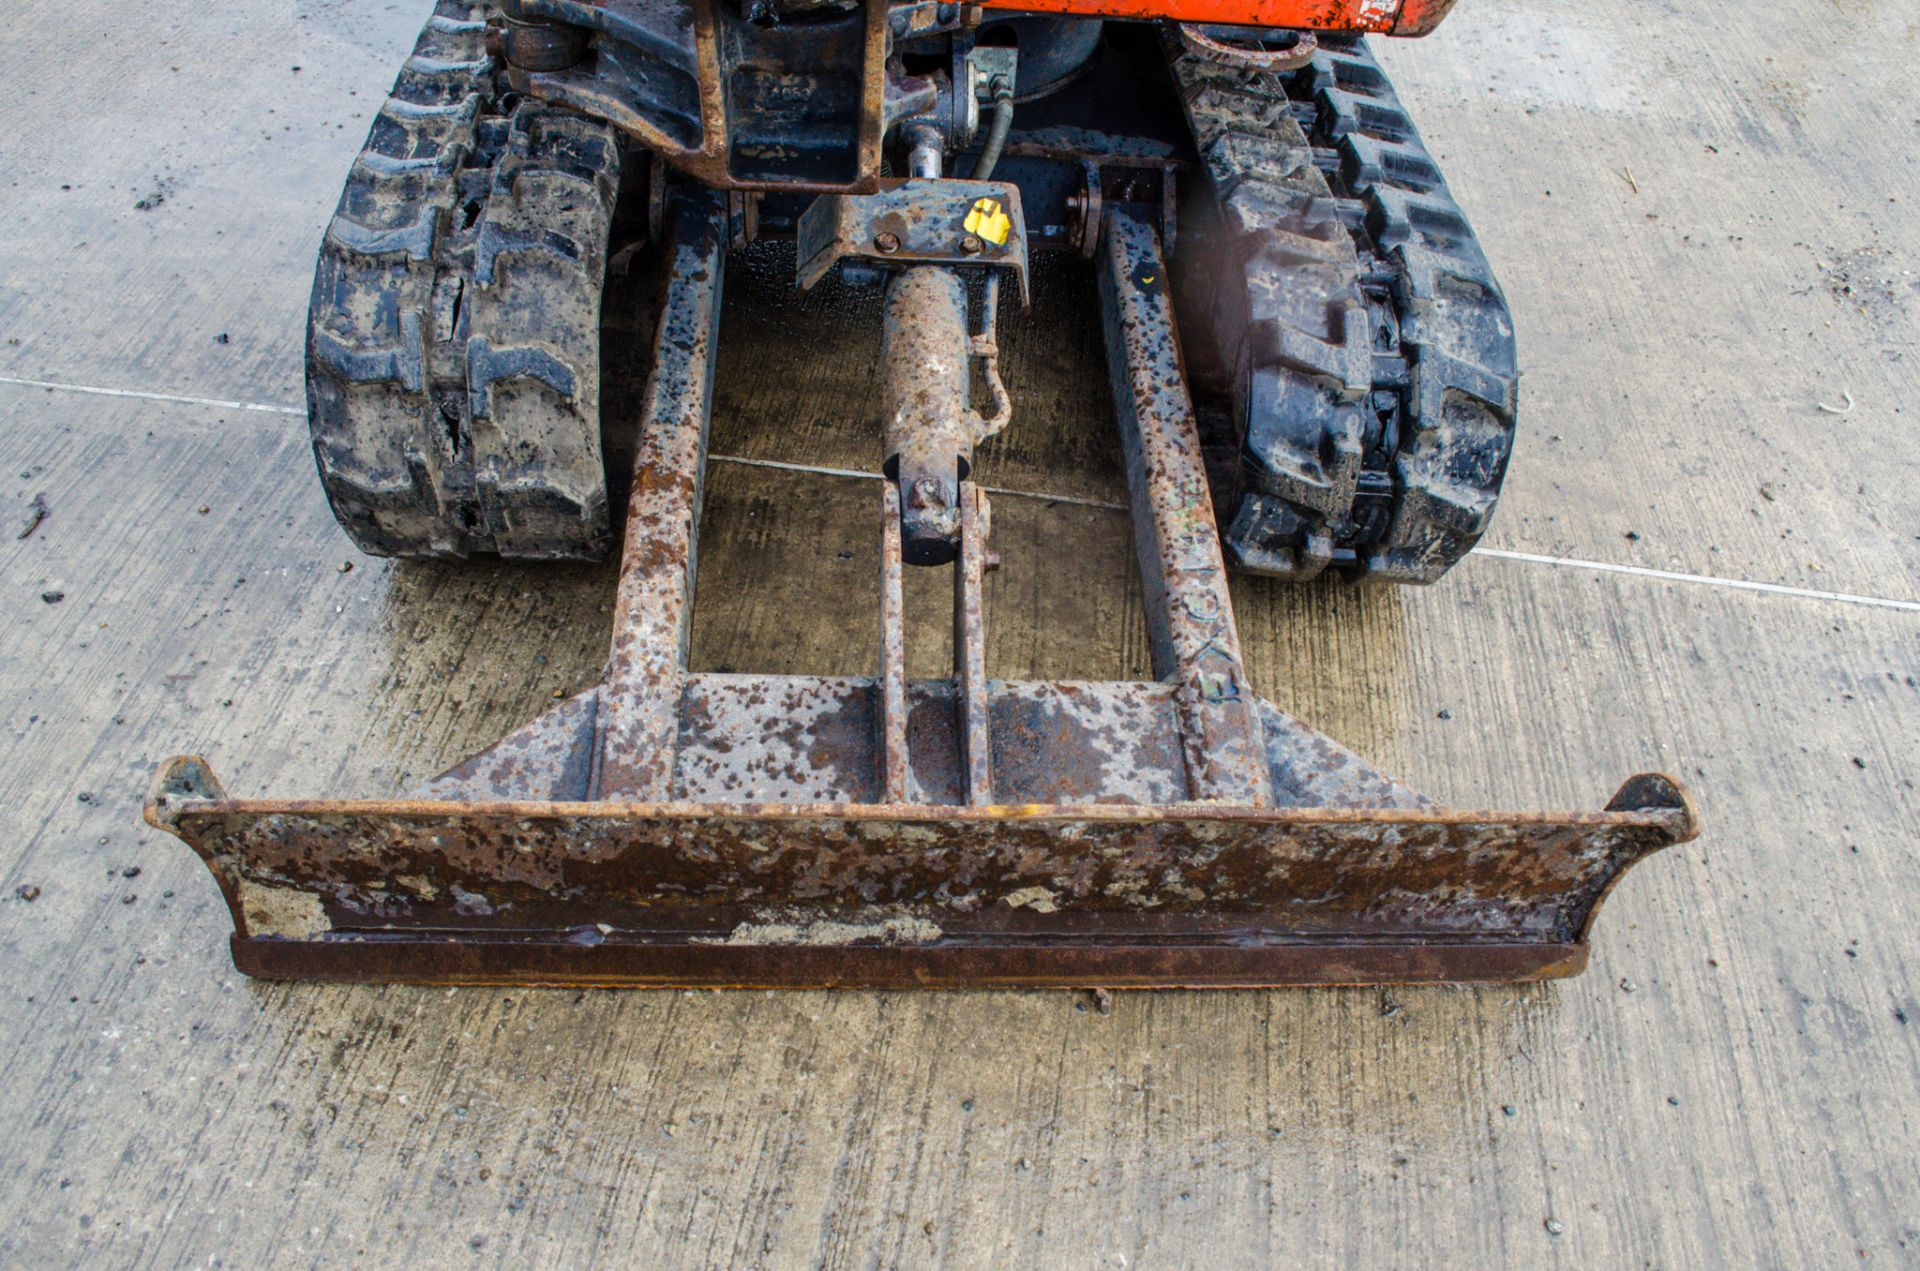 Kubota KX015-4 1.5 tonne rubber tracked mini excavator Year: 2015 S/N: 58367 Recorded Hours: 2777 - Image 14 of 22